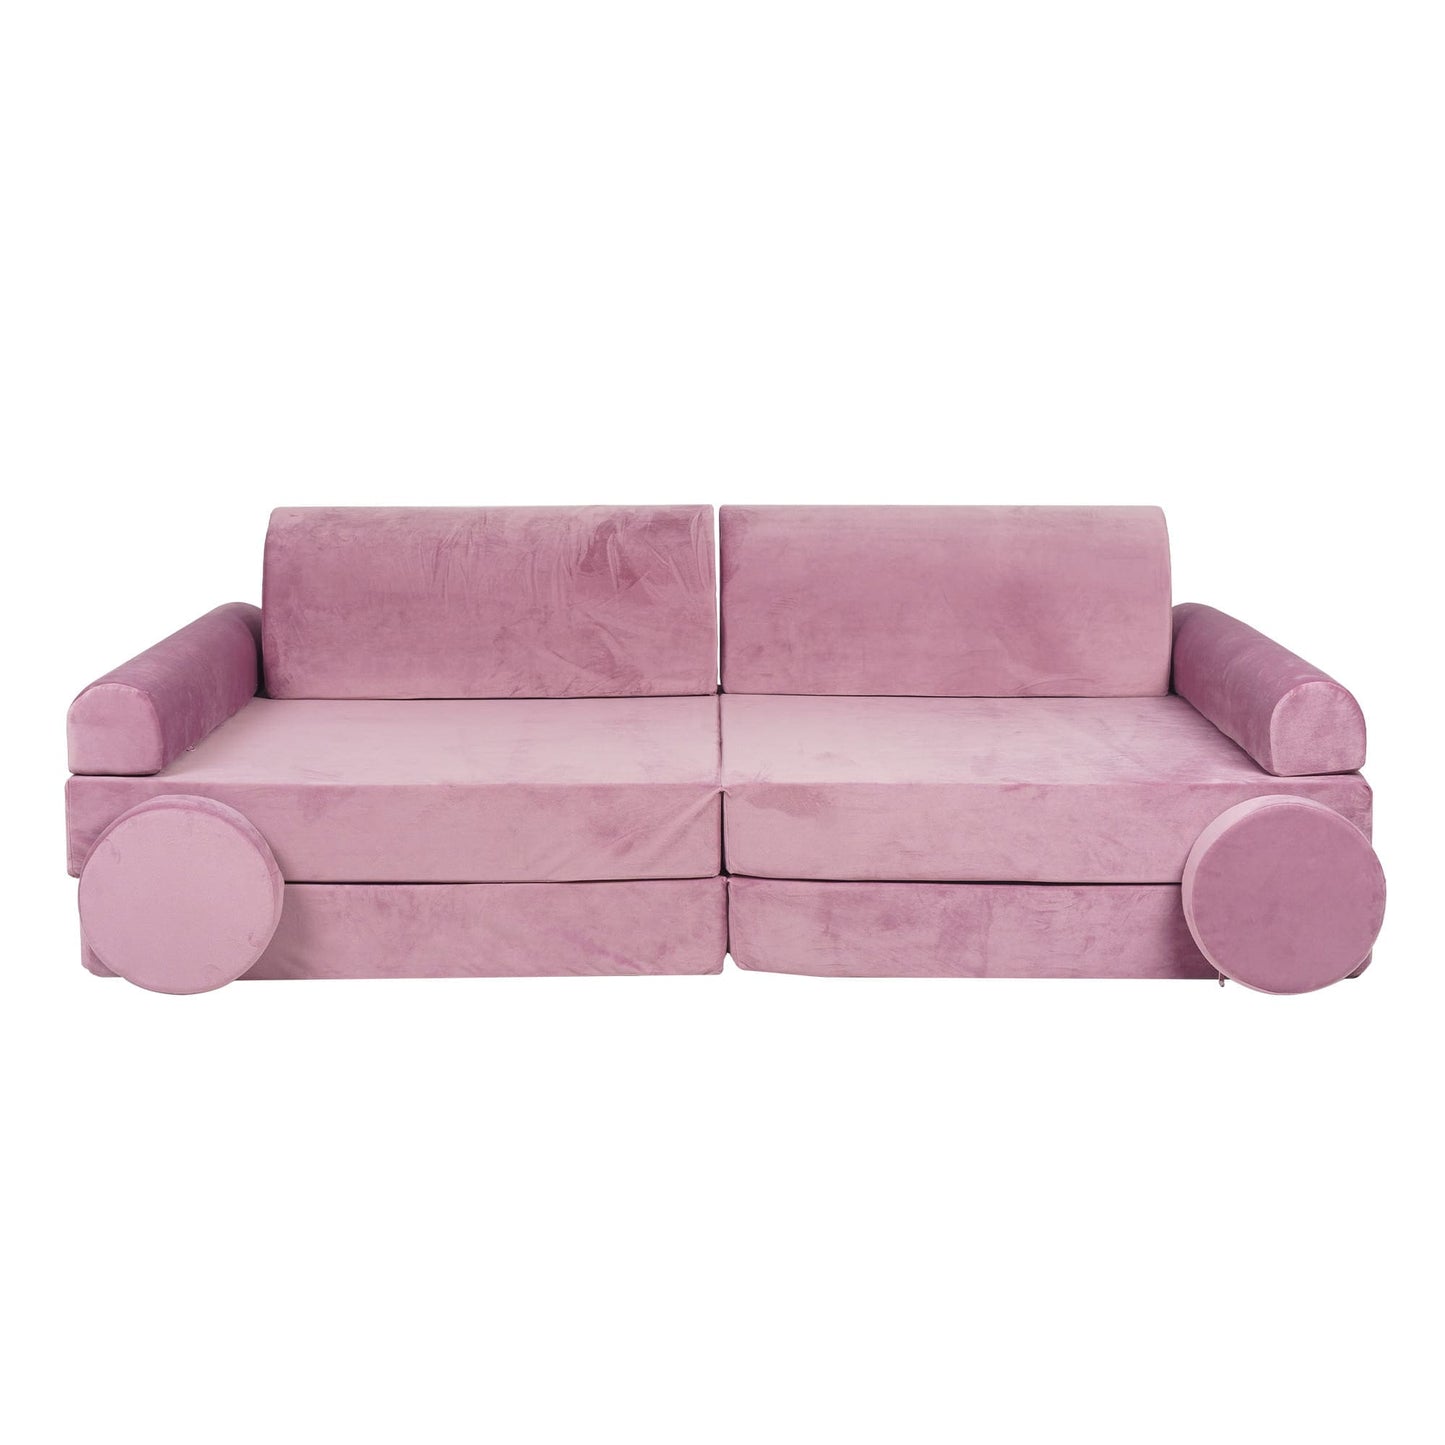 Luxury Velvet Sofa For Kids By MeowBaby - Stylemykid.com